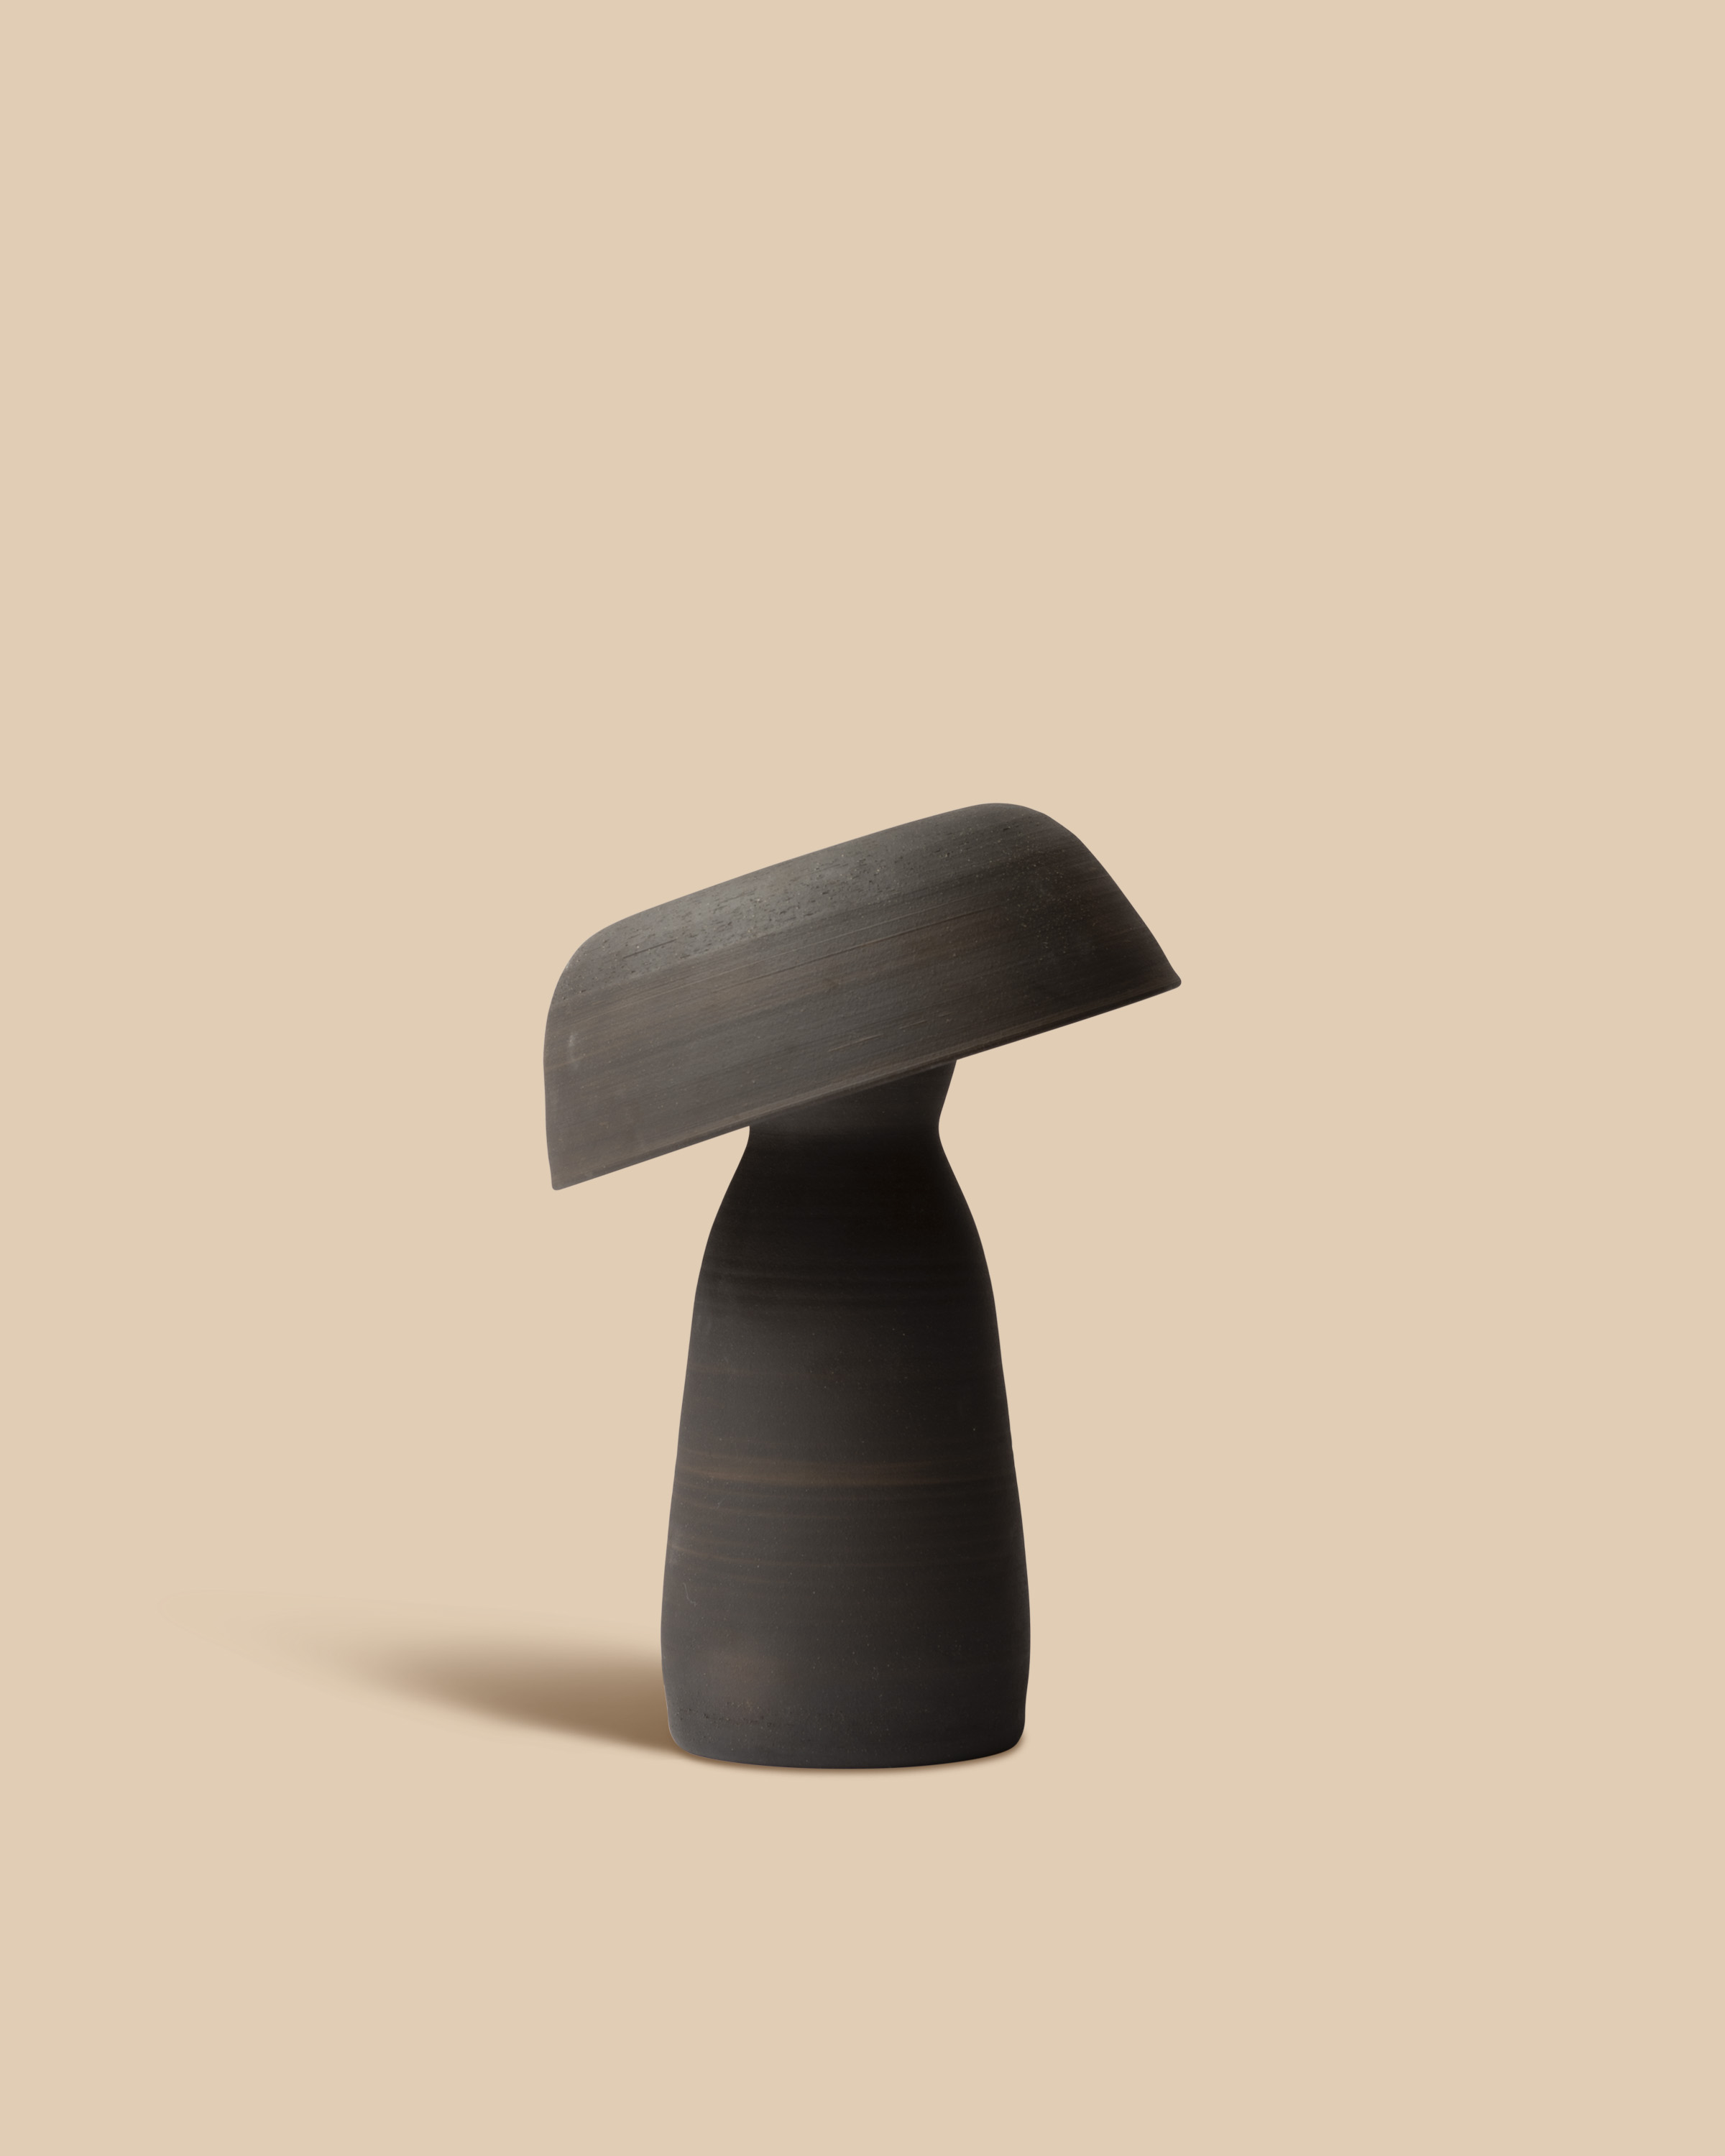 Mushroom Small Ceramic Table Lamp by Nicholas Bijan Pourfard Dramatic Lighting Decor in Black Raw Glaze